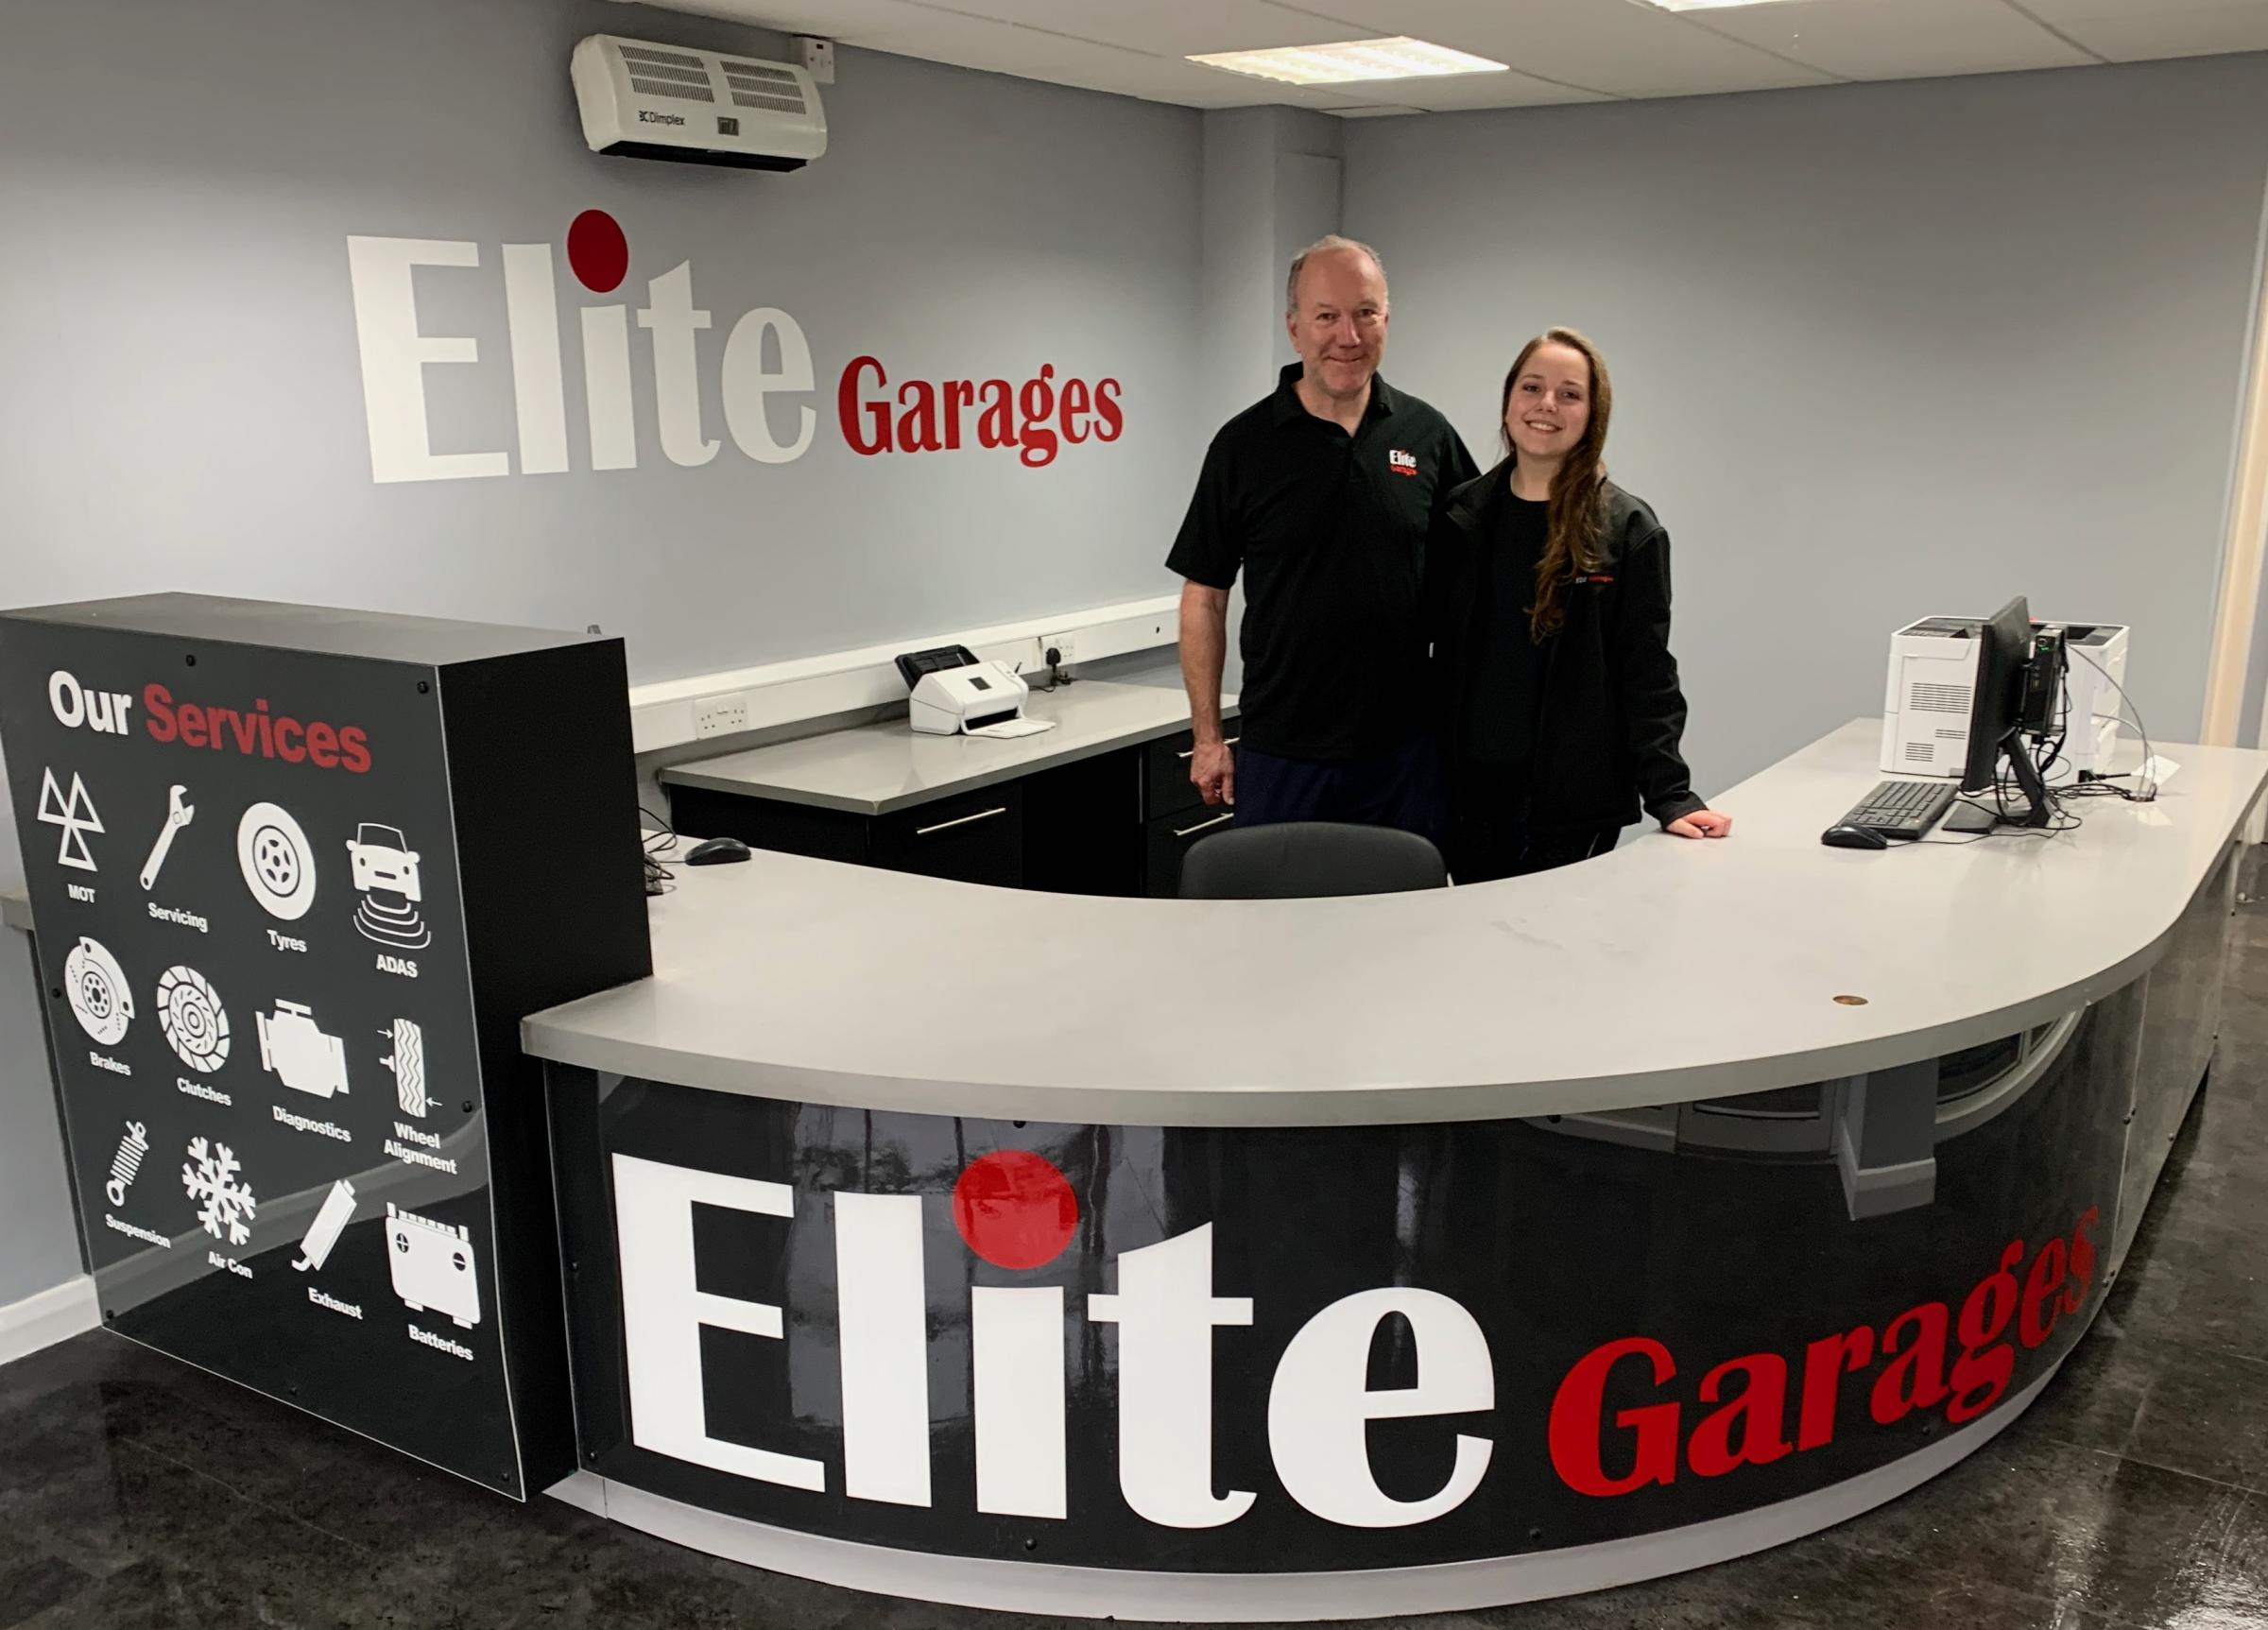 Richard and Kelsie Whittemore at Elite Garages, Maidstone